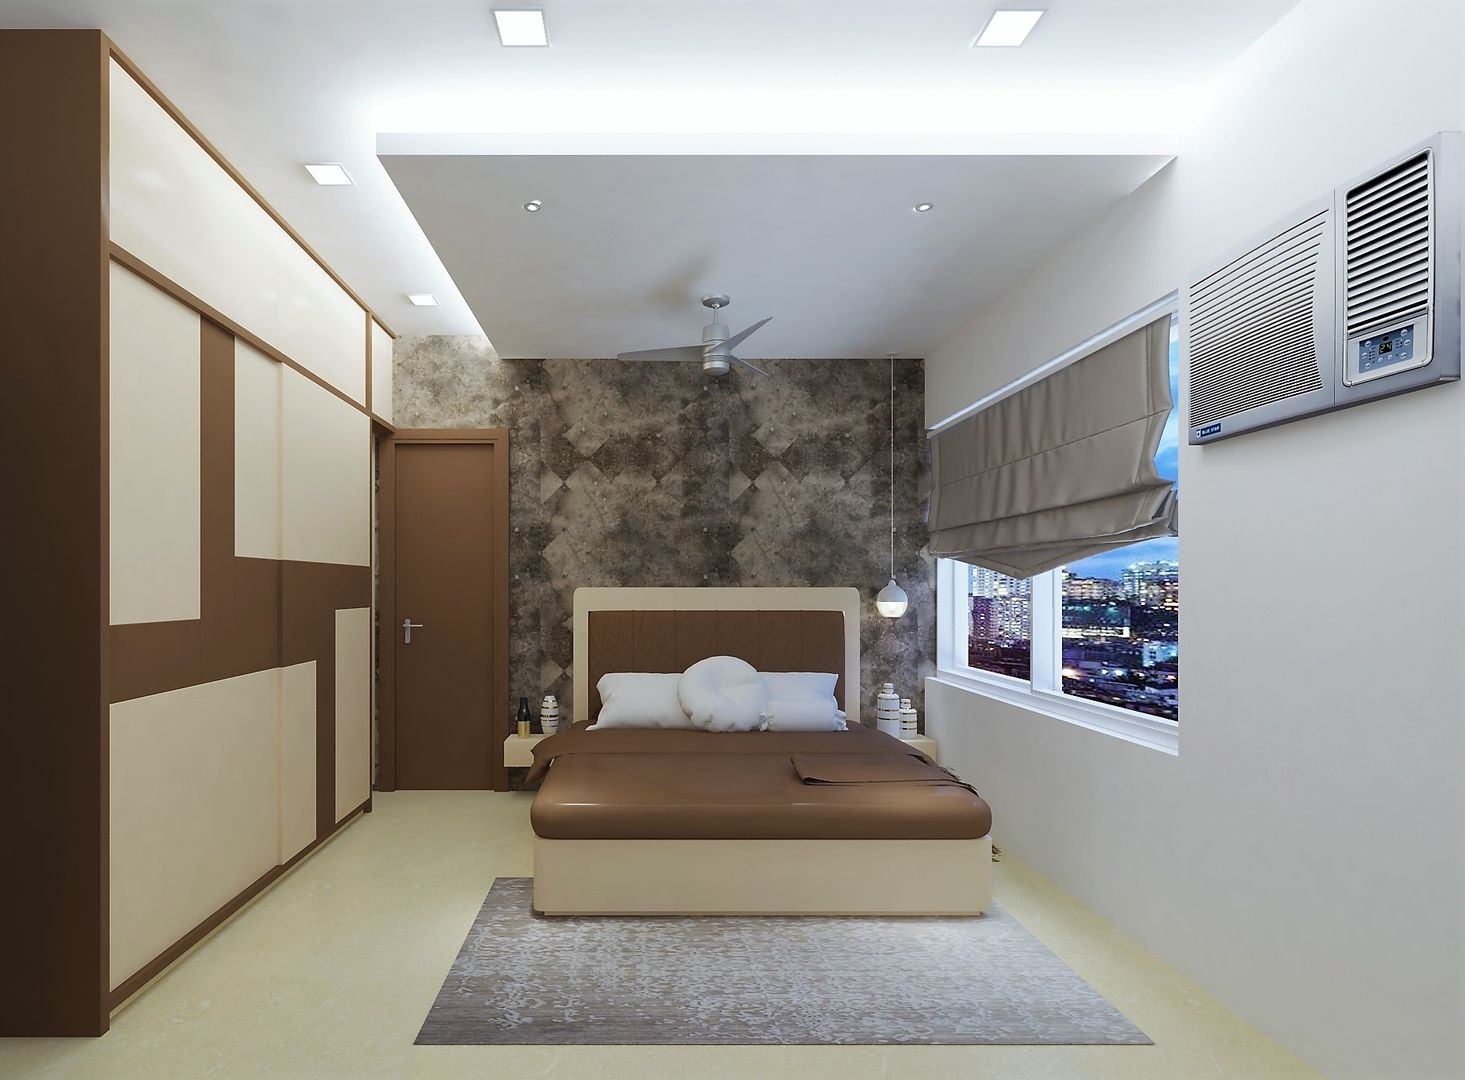 Moden Bedroom Designs Golden Spiral Productionz (p) ltd Modern style bedroom